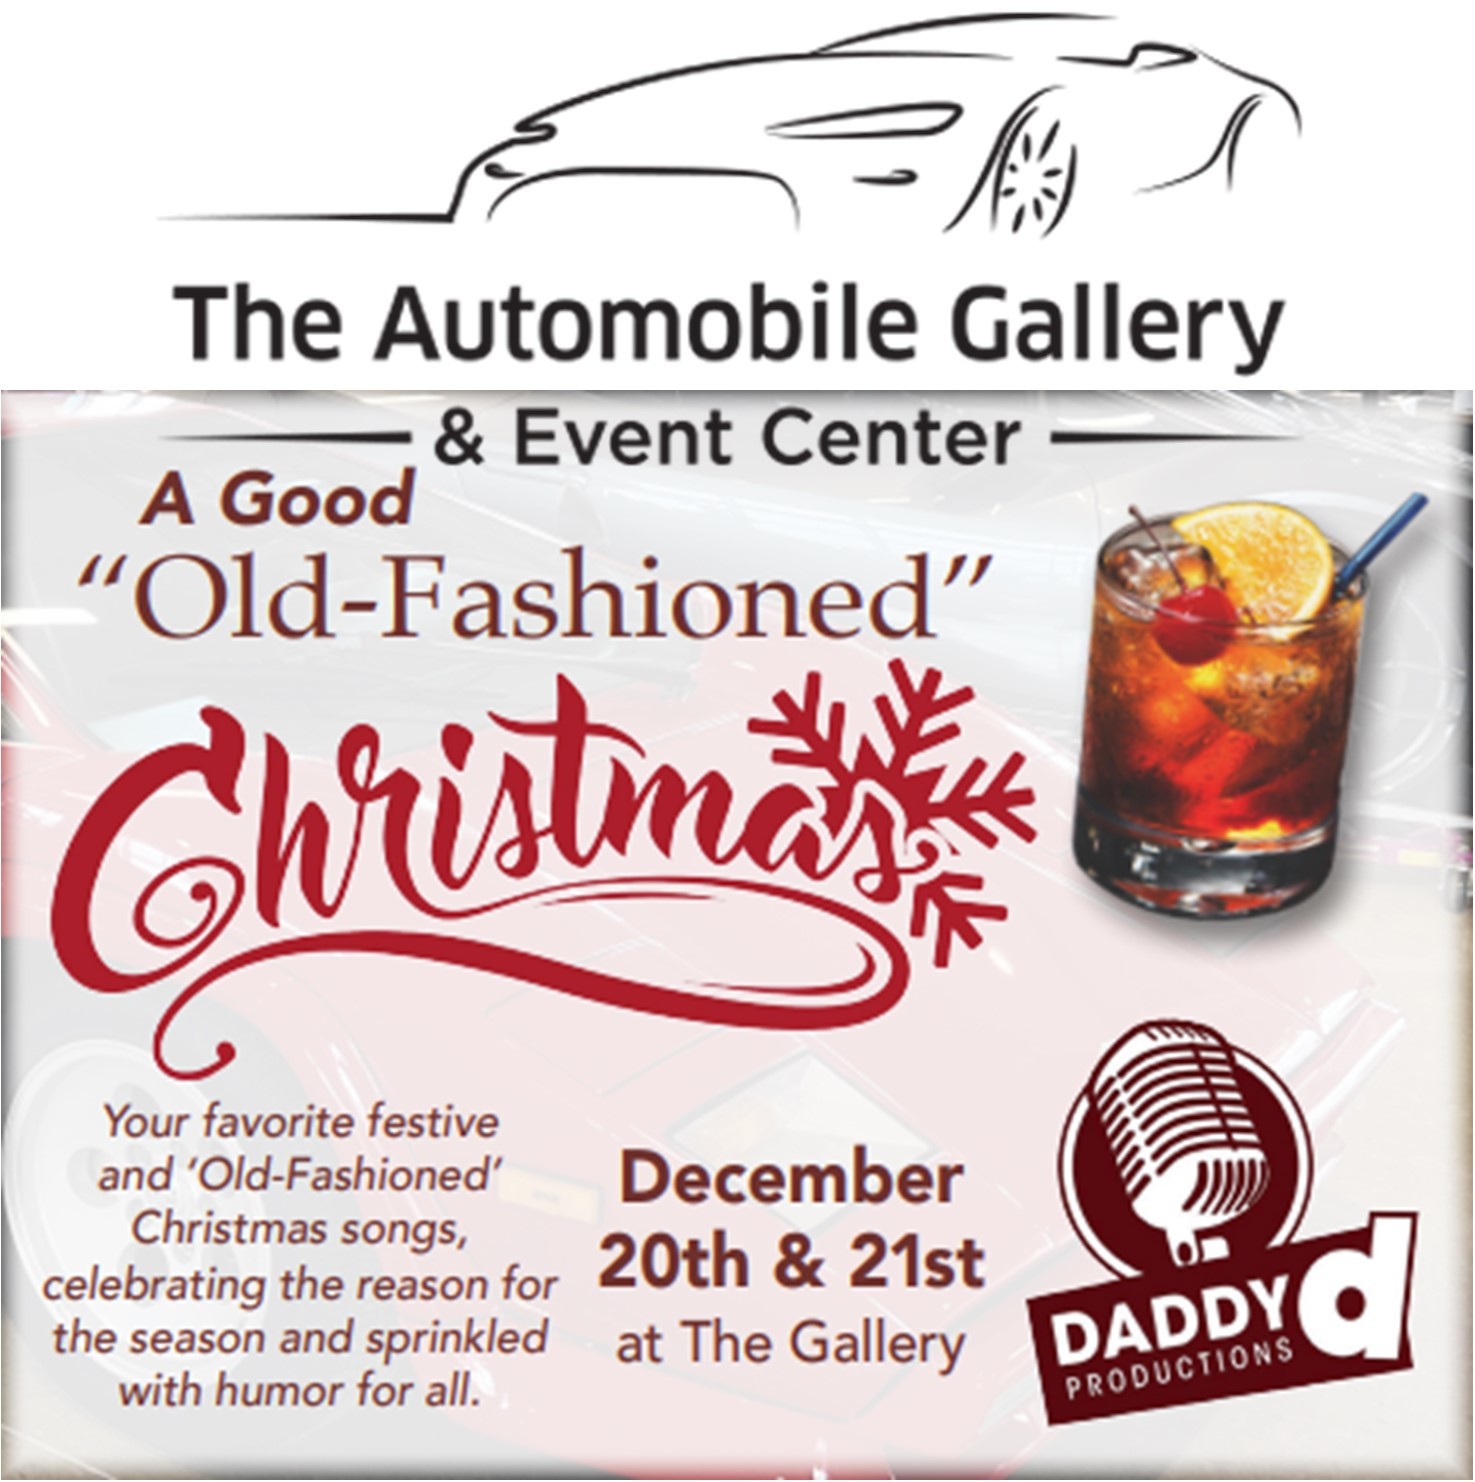 Automobile Gallery "Old Fashion Christmas" (Green Bay) Dec 20 & 21